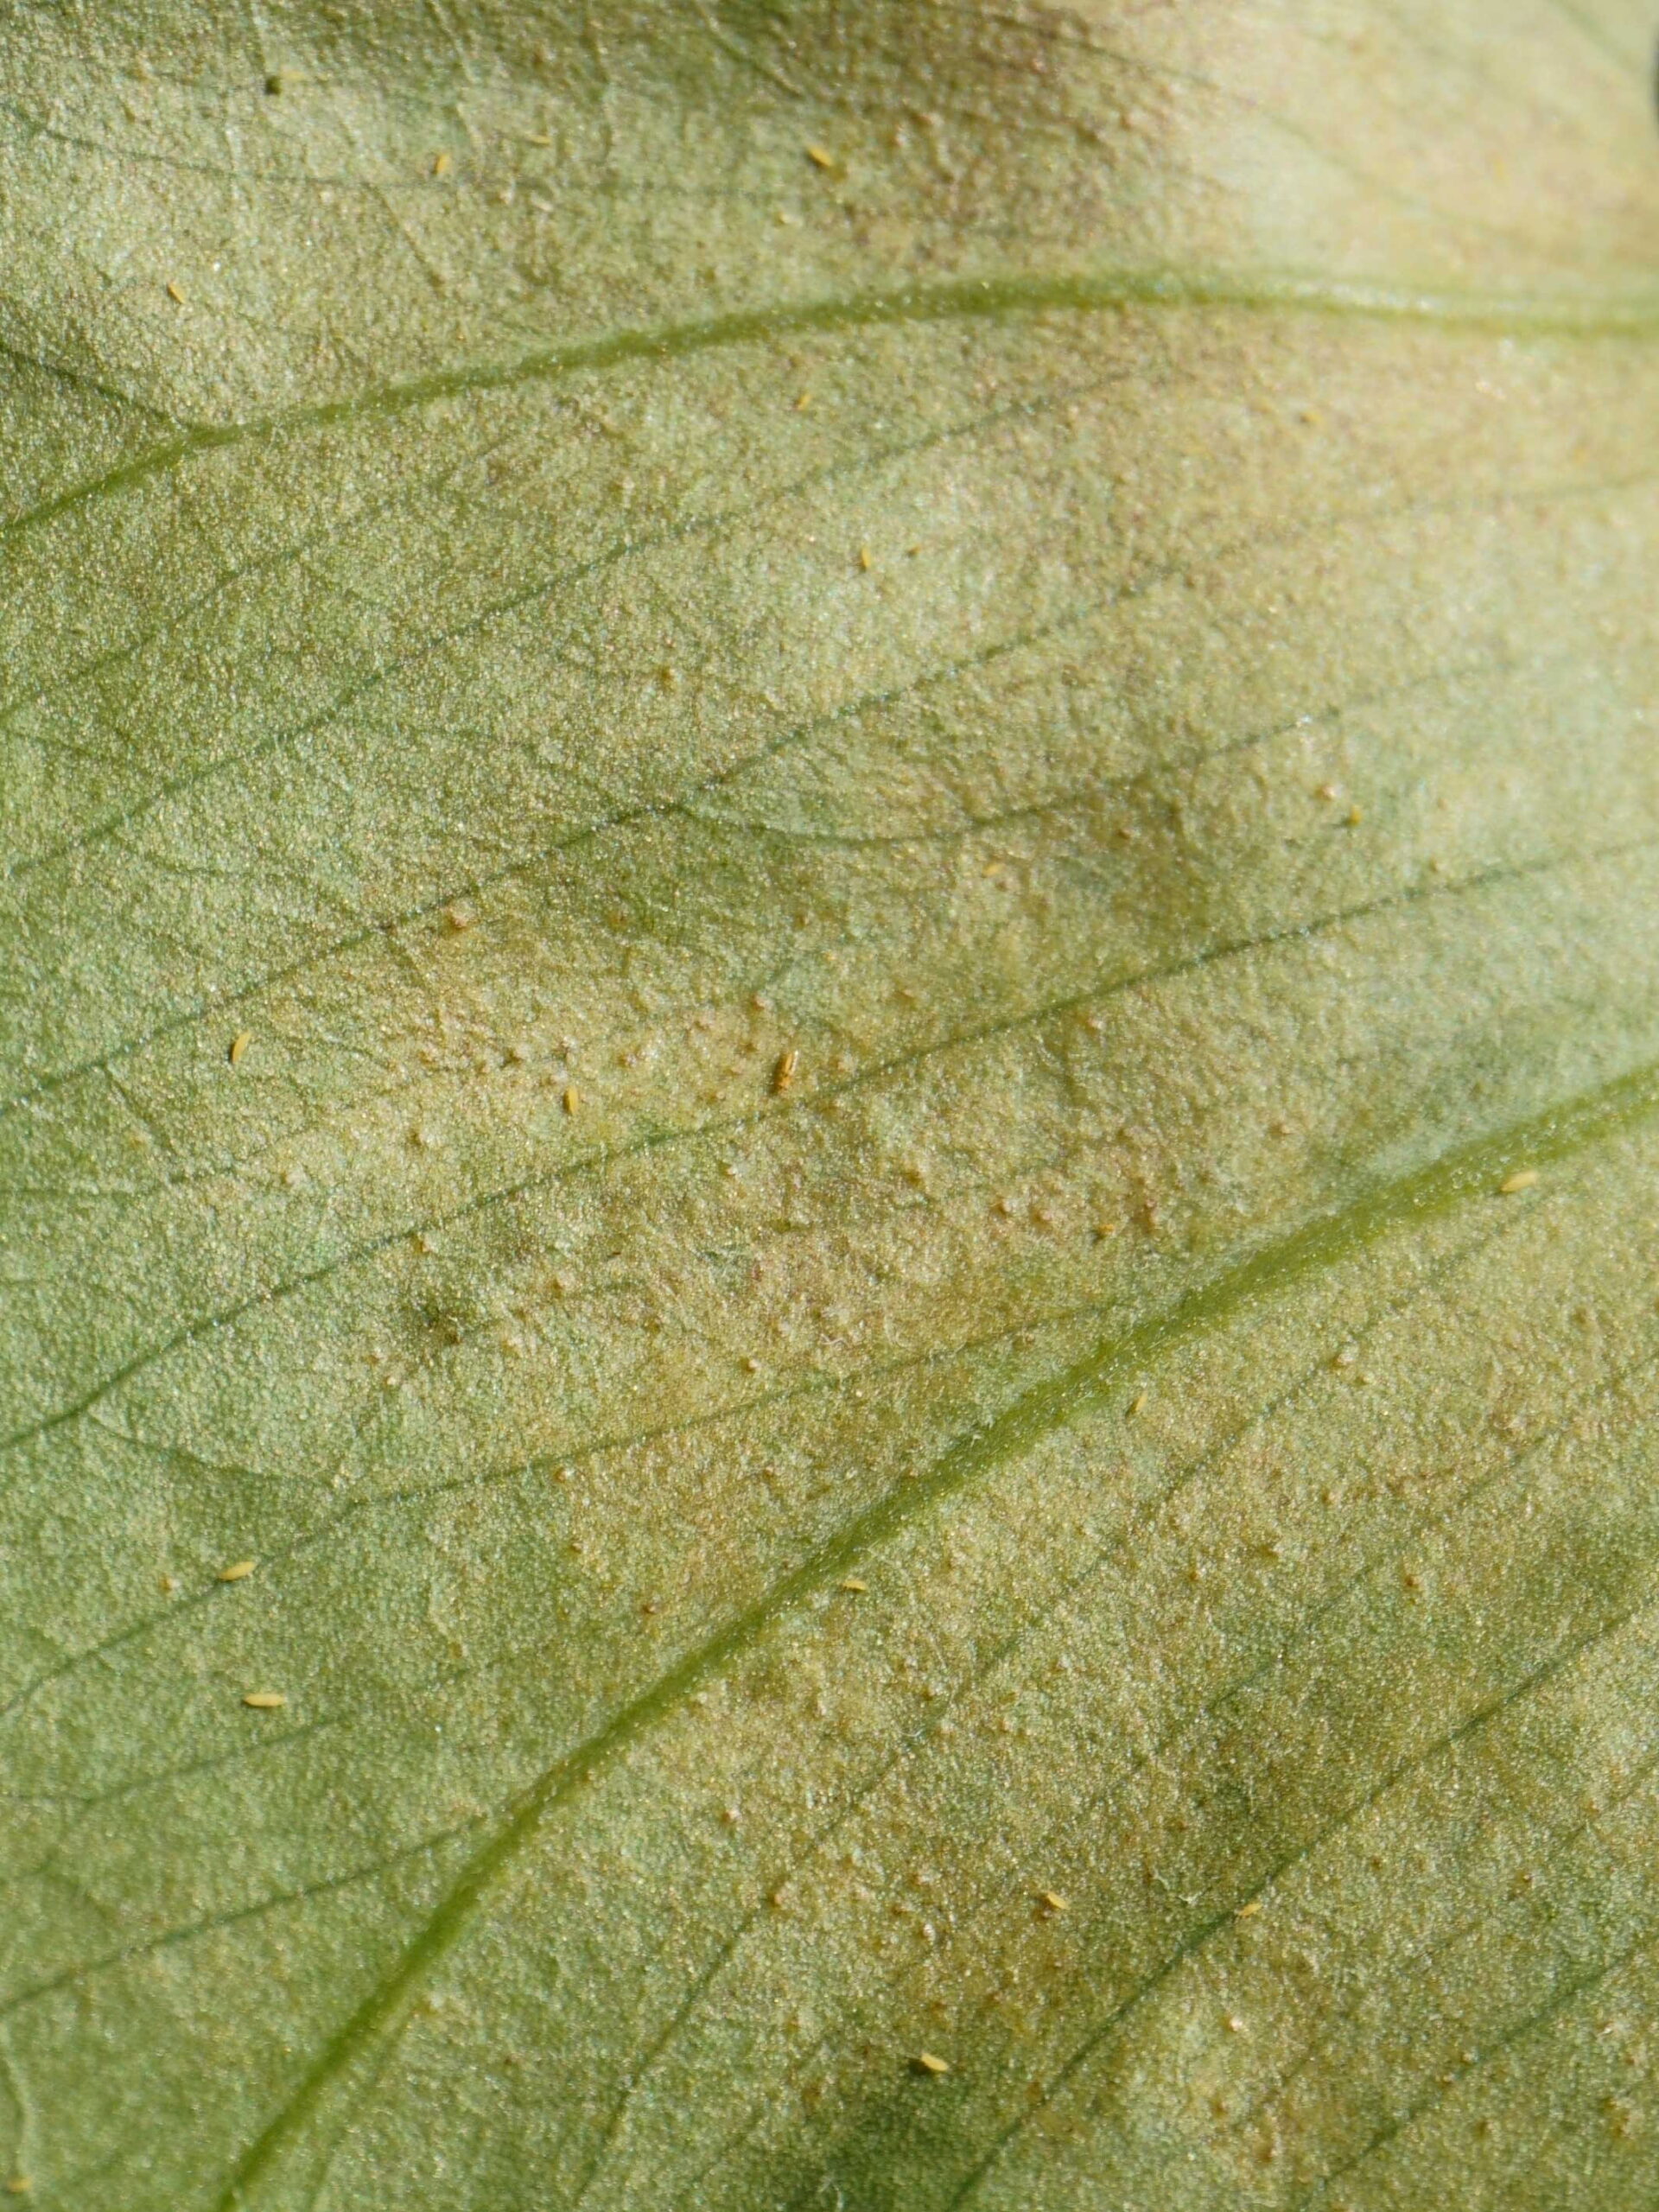 Identifier larves jaunes thrips plantes